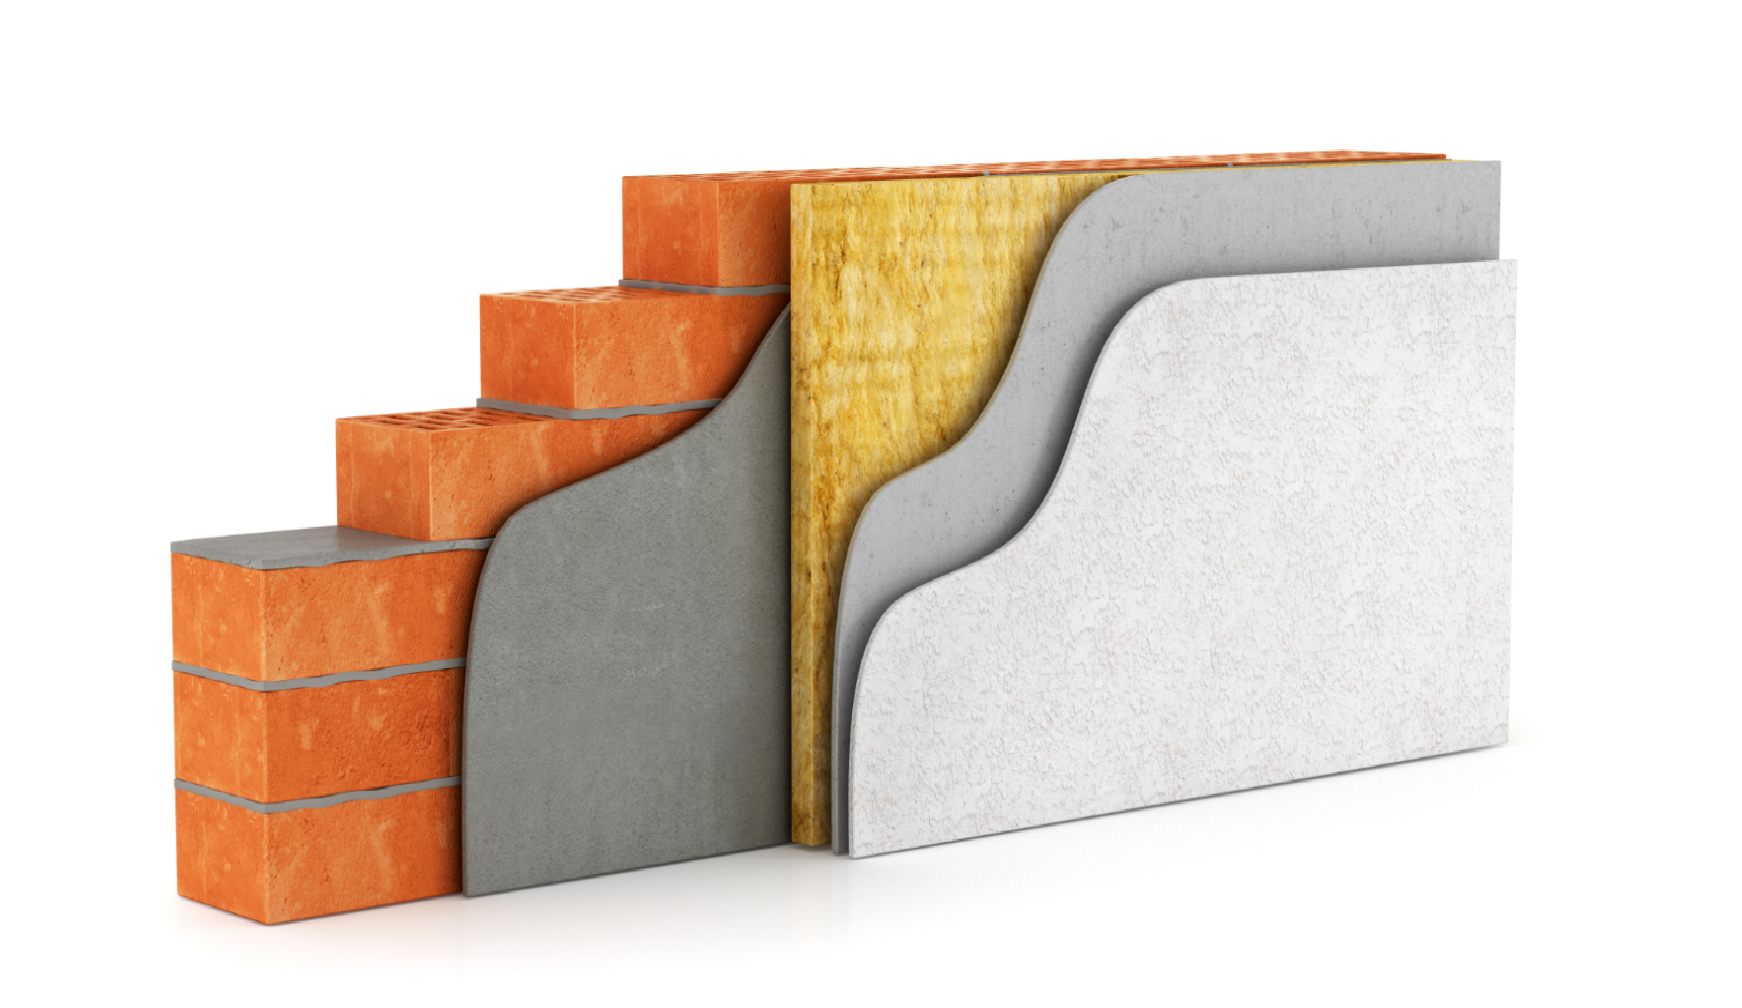 Fireproof Insulation Sandwich Board Fire Resistant Rock Wool Board - China  Rock Wool, Thermal Insulation